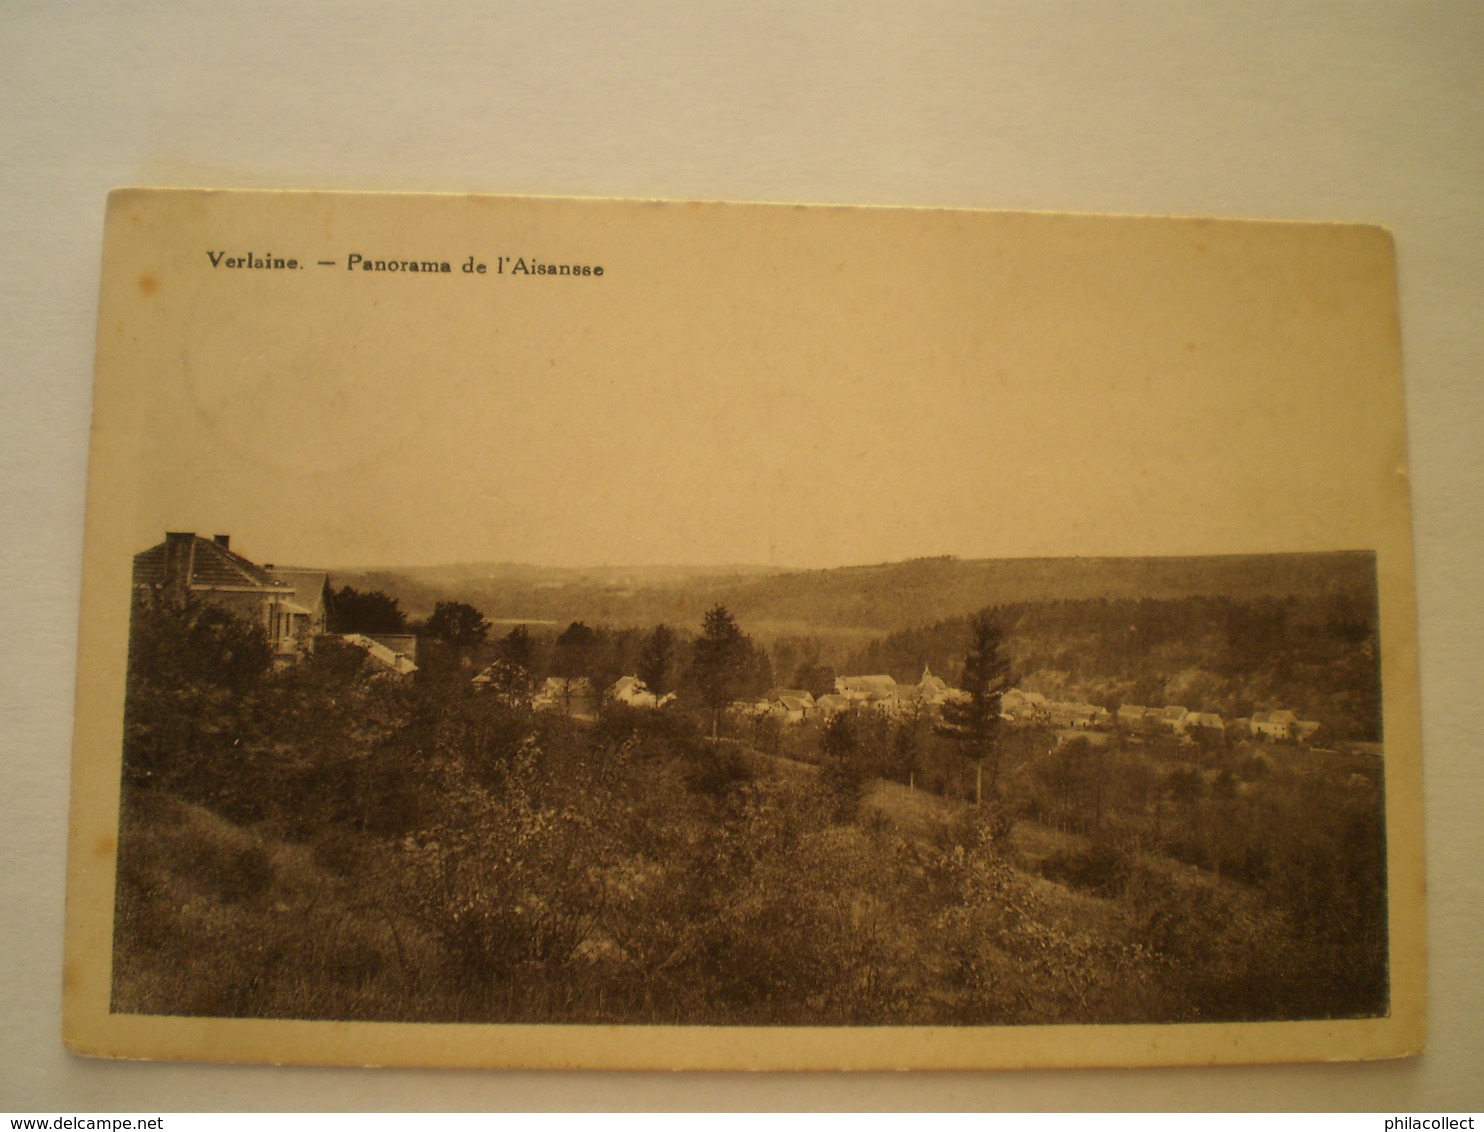 Verlaine (Liege) Panorama De L' Aisansse Used 191? - Verlaine